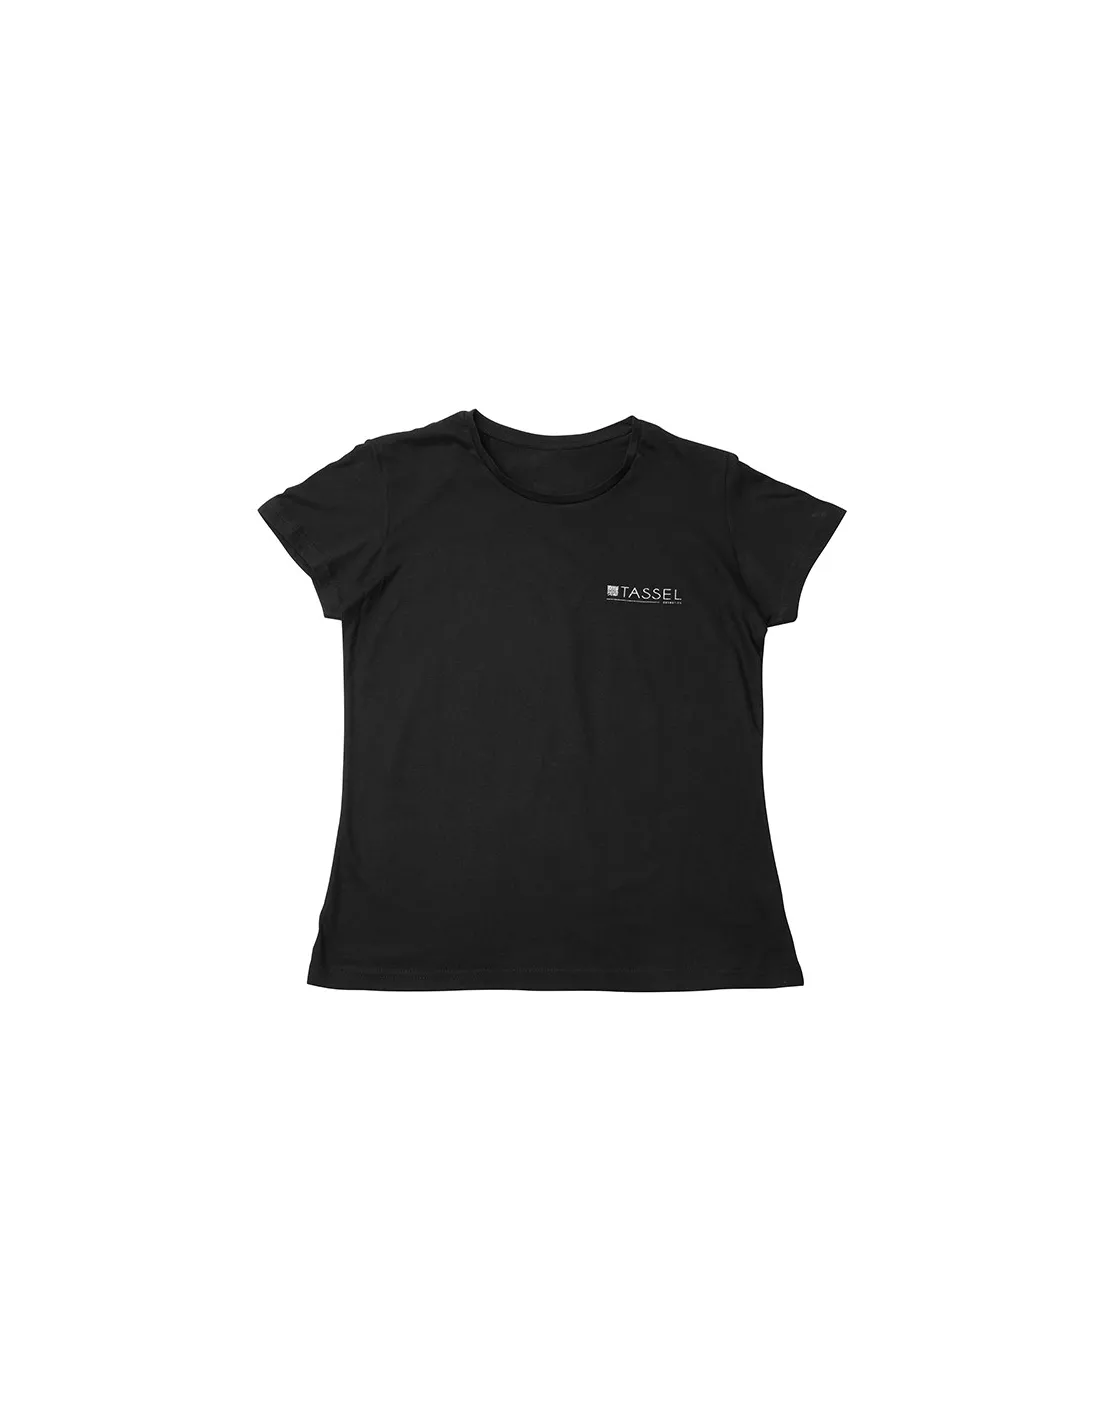 Enojado Stratford on Avon Sede Camiseta Negra Tassel | Vestuario Peluqueria Barberia Barato